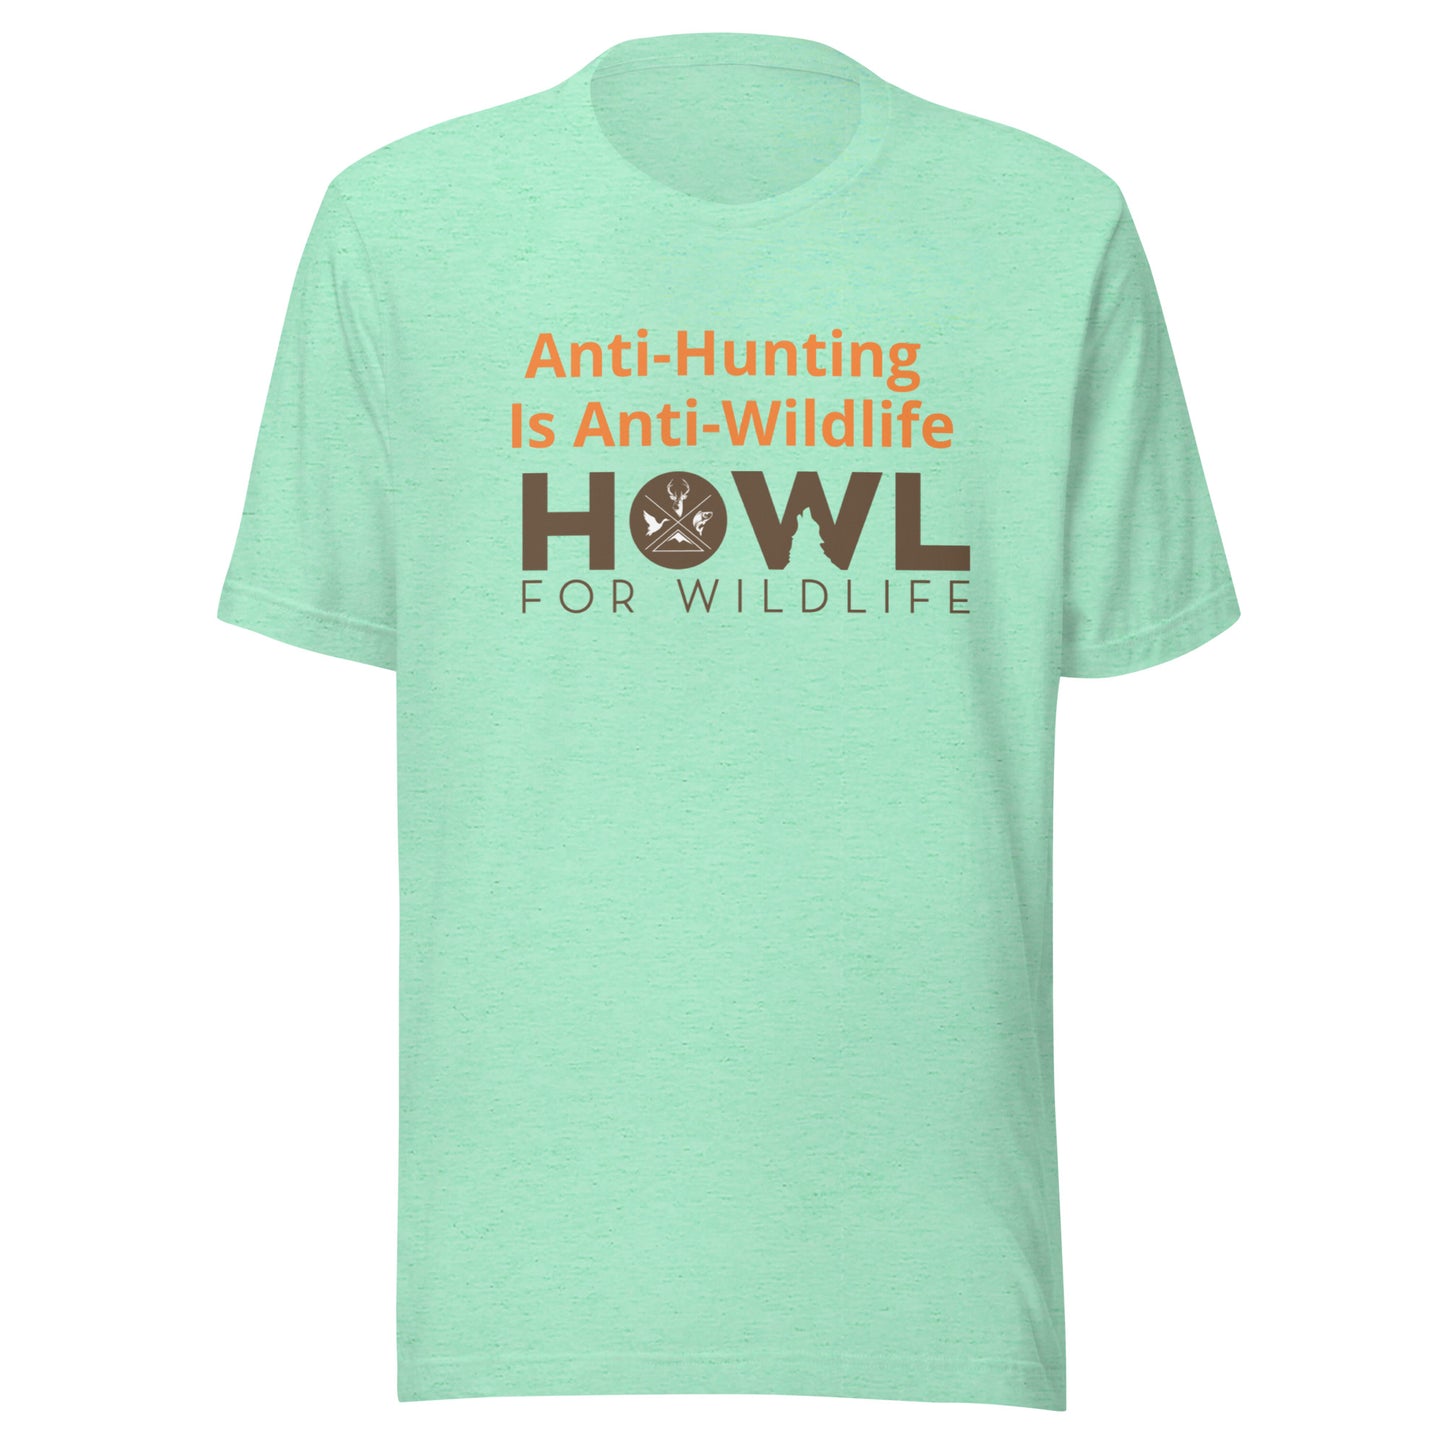 Anti-hunting is anti-wildlife - Unisex t-shirt